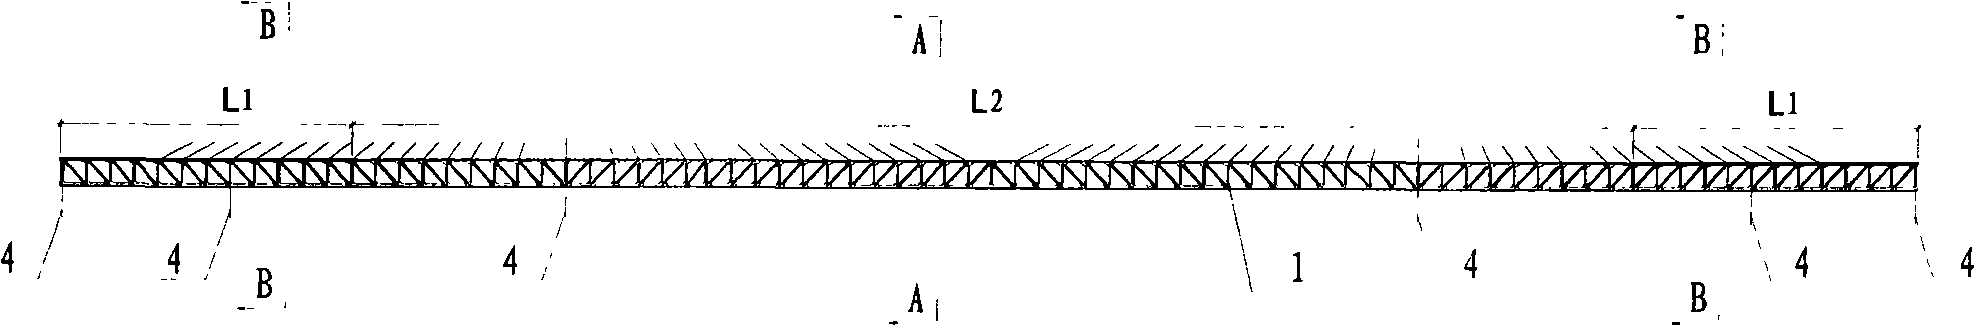 Novel steel braced girder composite structure